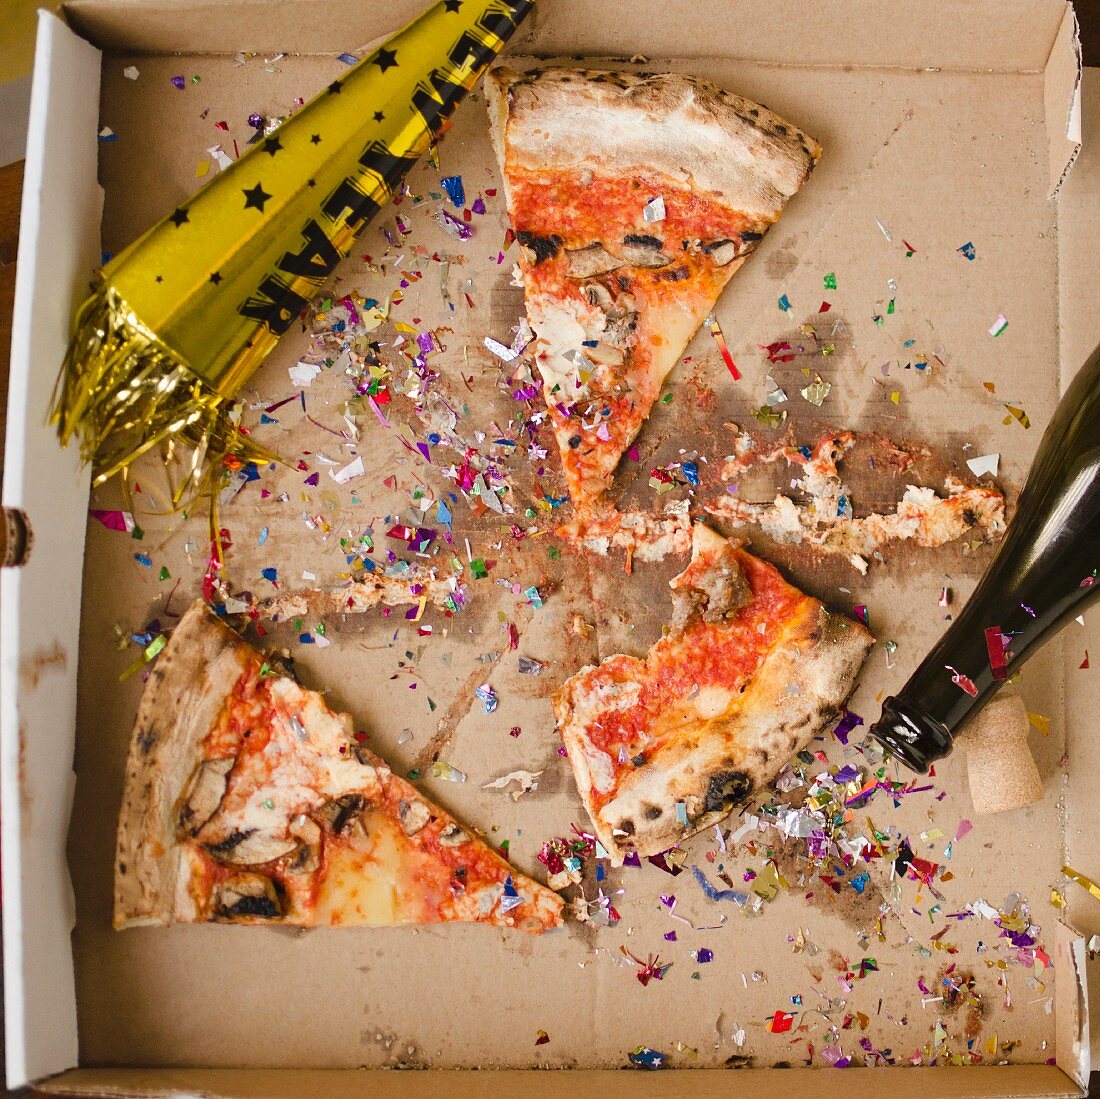 Slices of pizza and confetti in in box